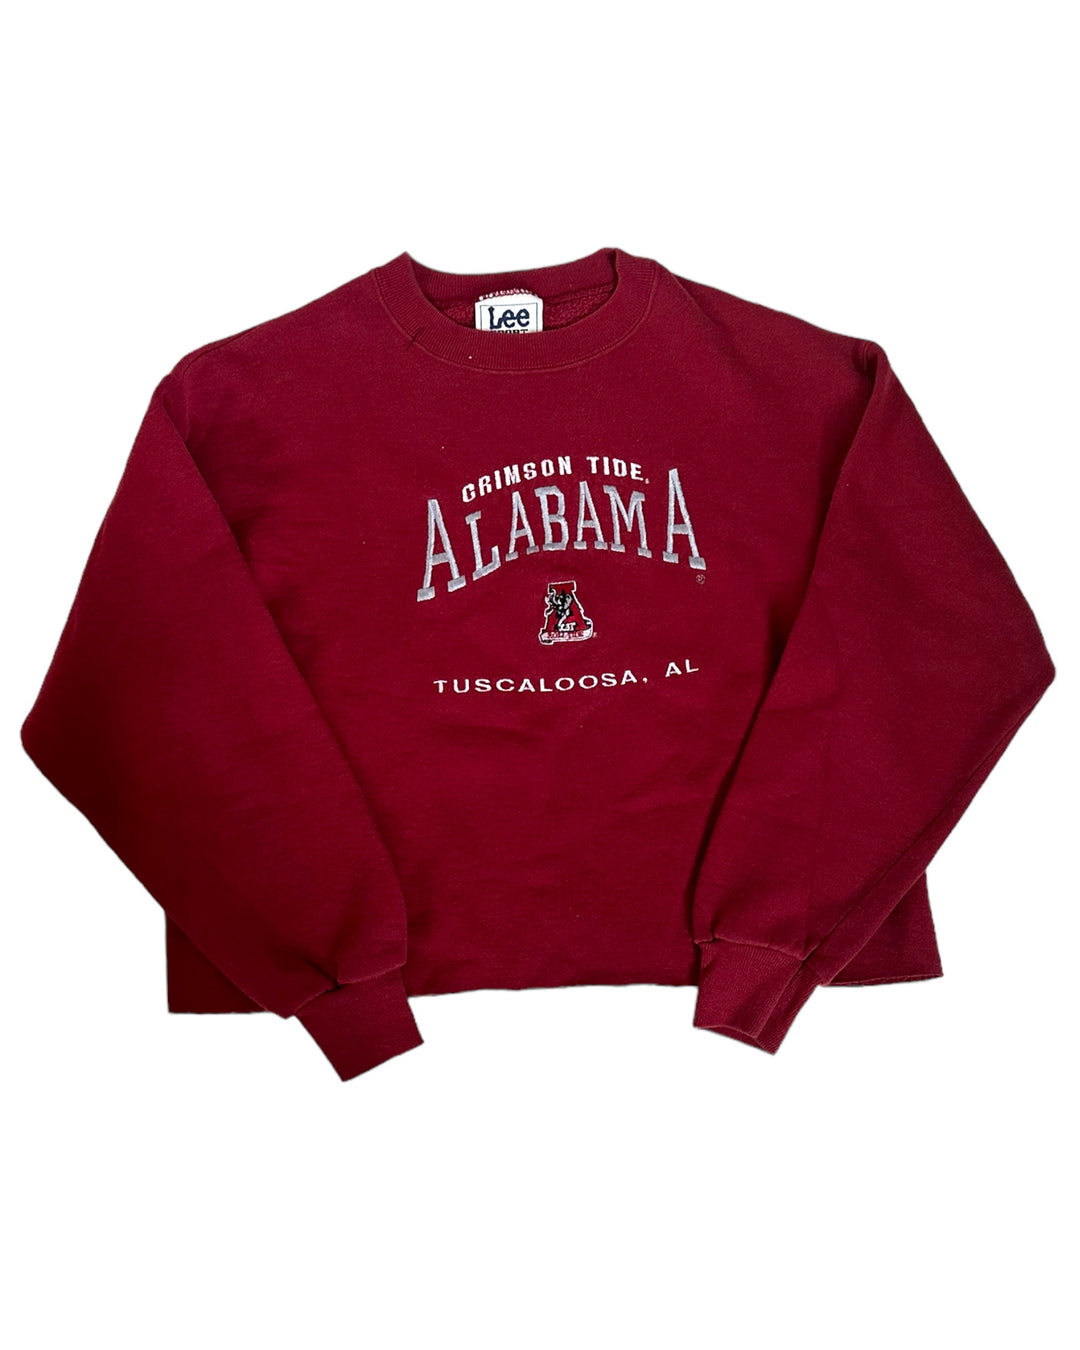 Alabama Cropped Vintage Sweatshirt